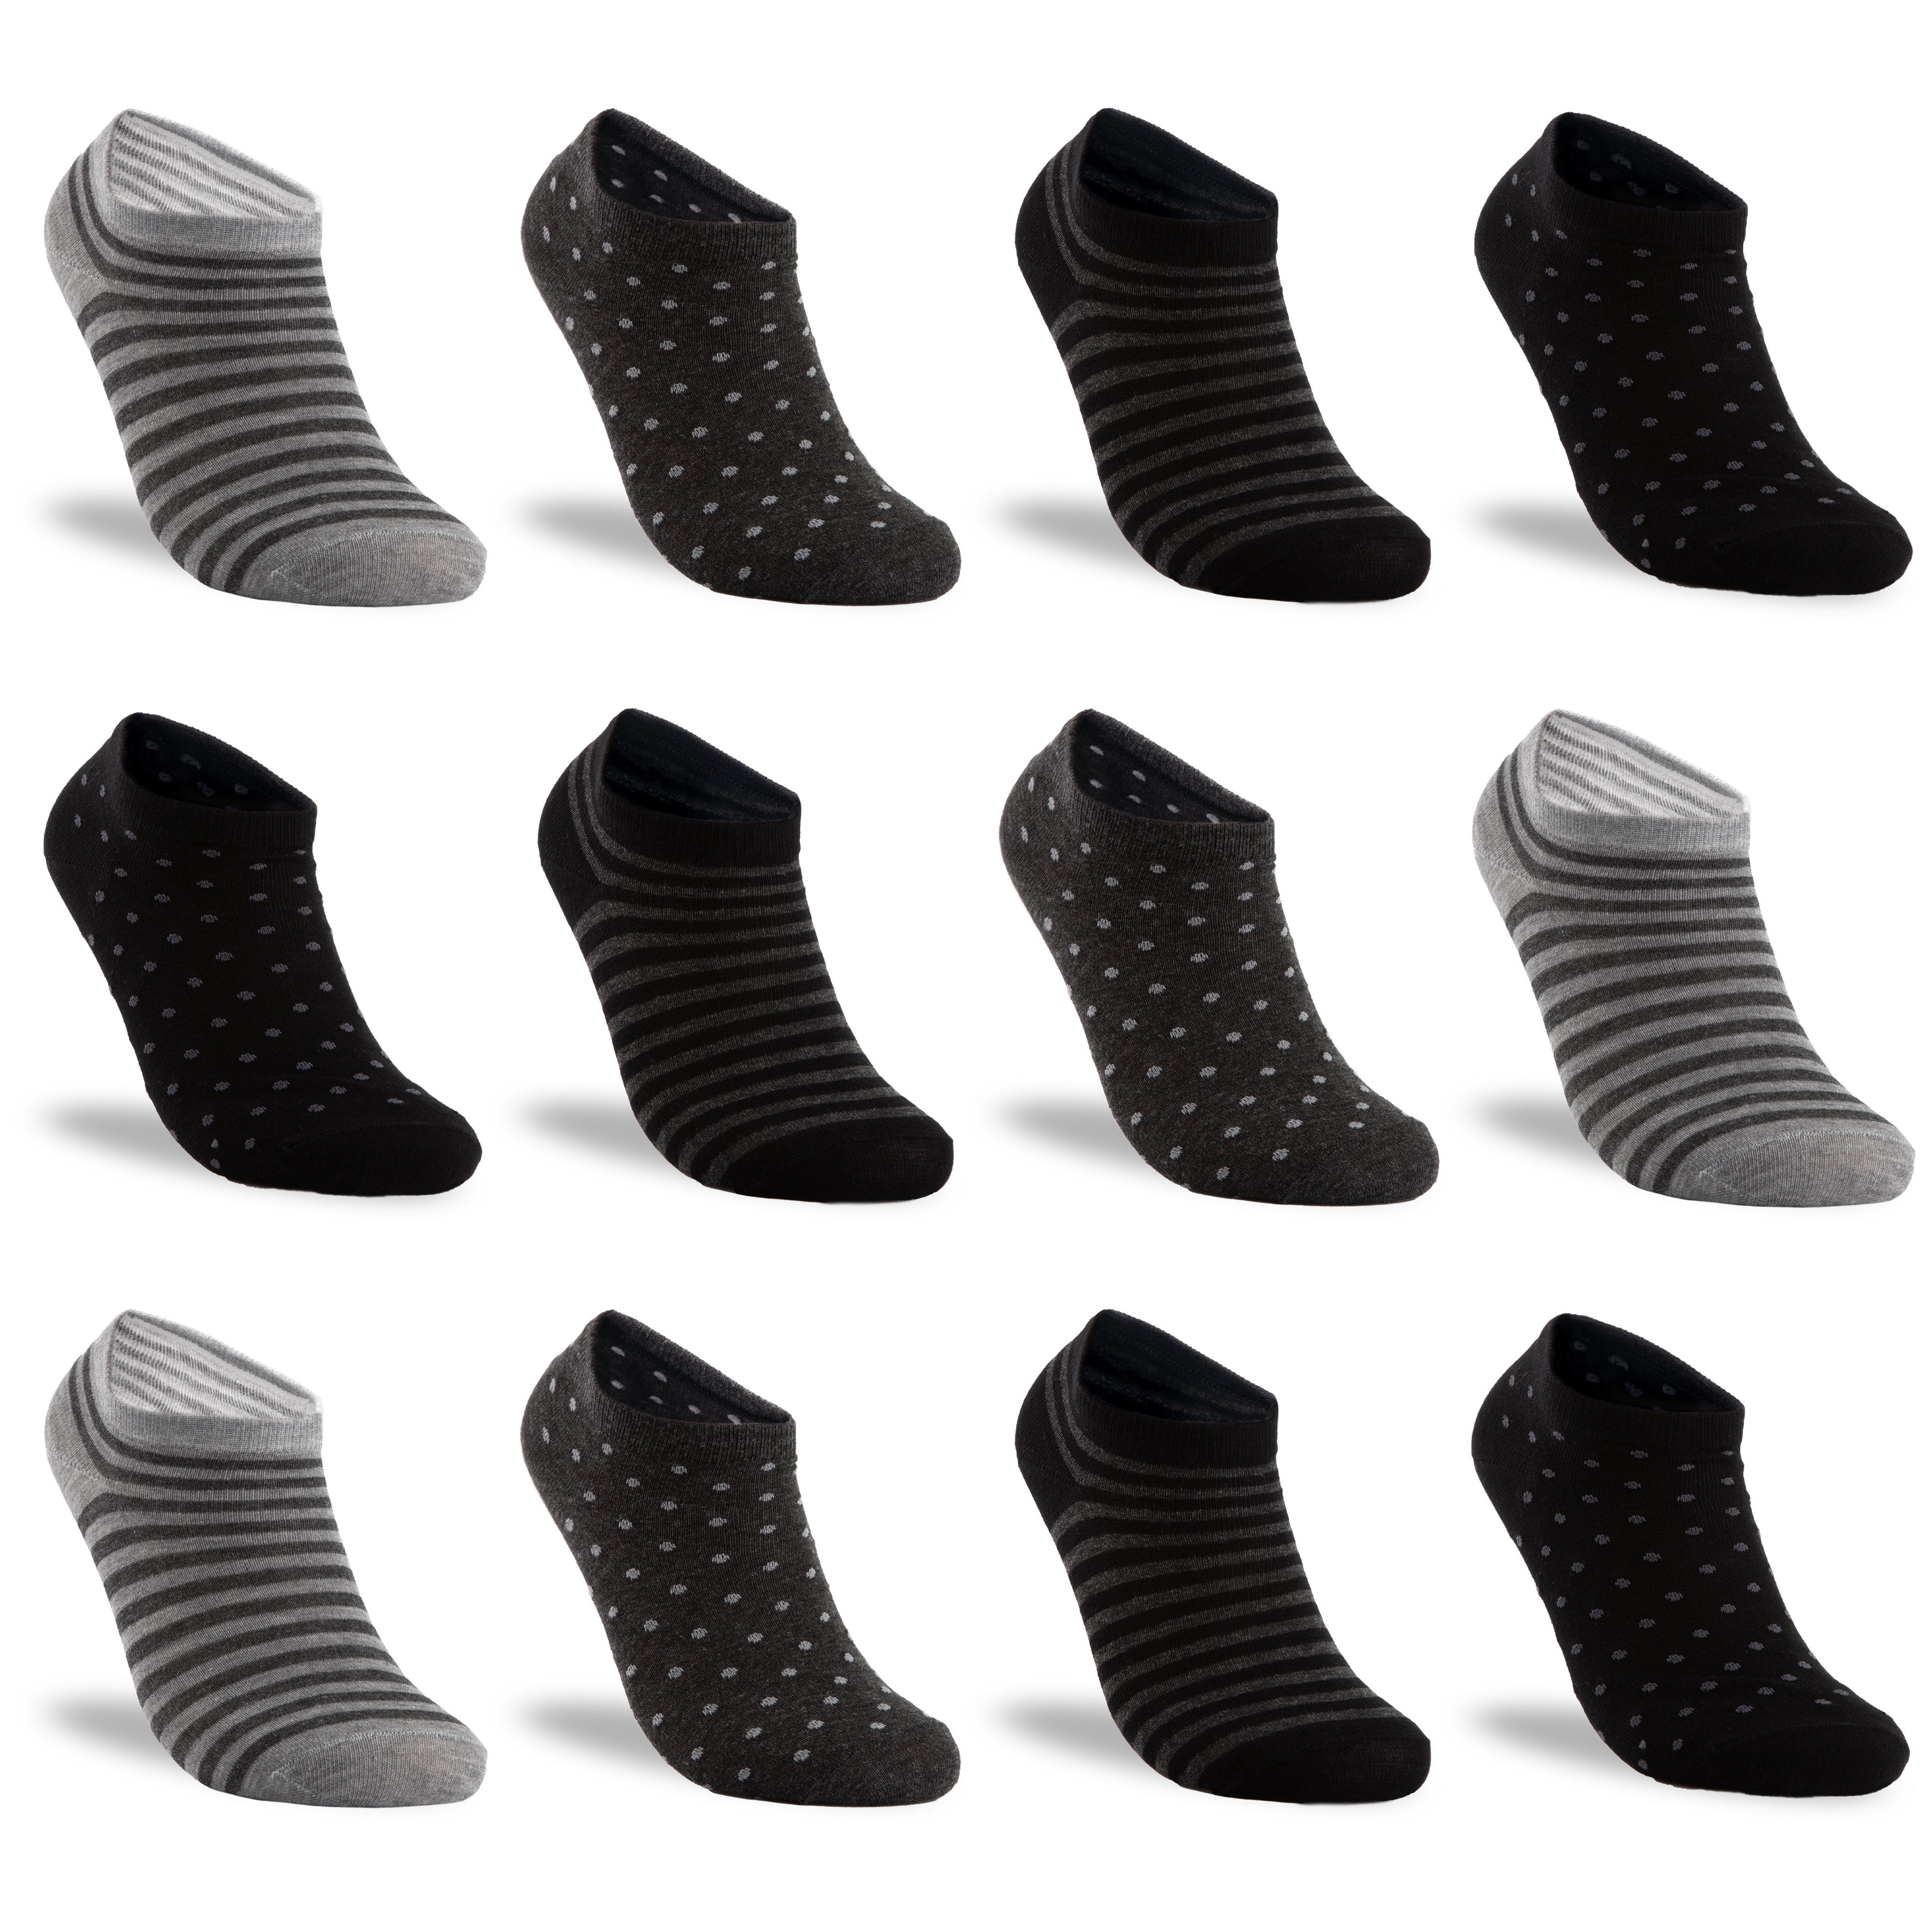 TEXEMP Sneakersocken 6, 12, 18 Paar Damen Sneaker Socken Kinder Baumwolle Freizeit Sport (Packung, 18-Paar) 90% Baumwolle